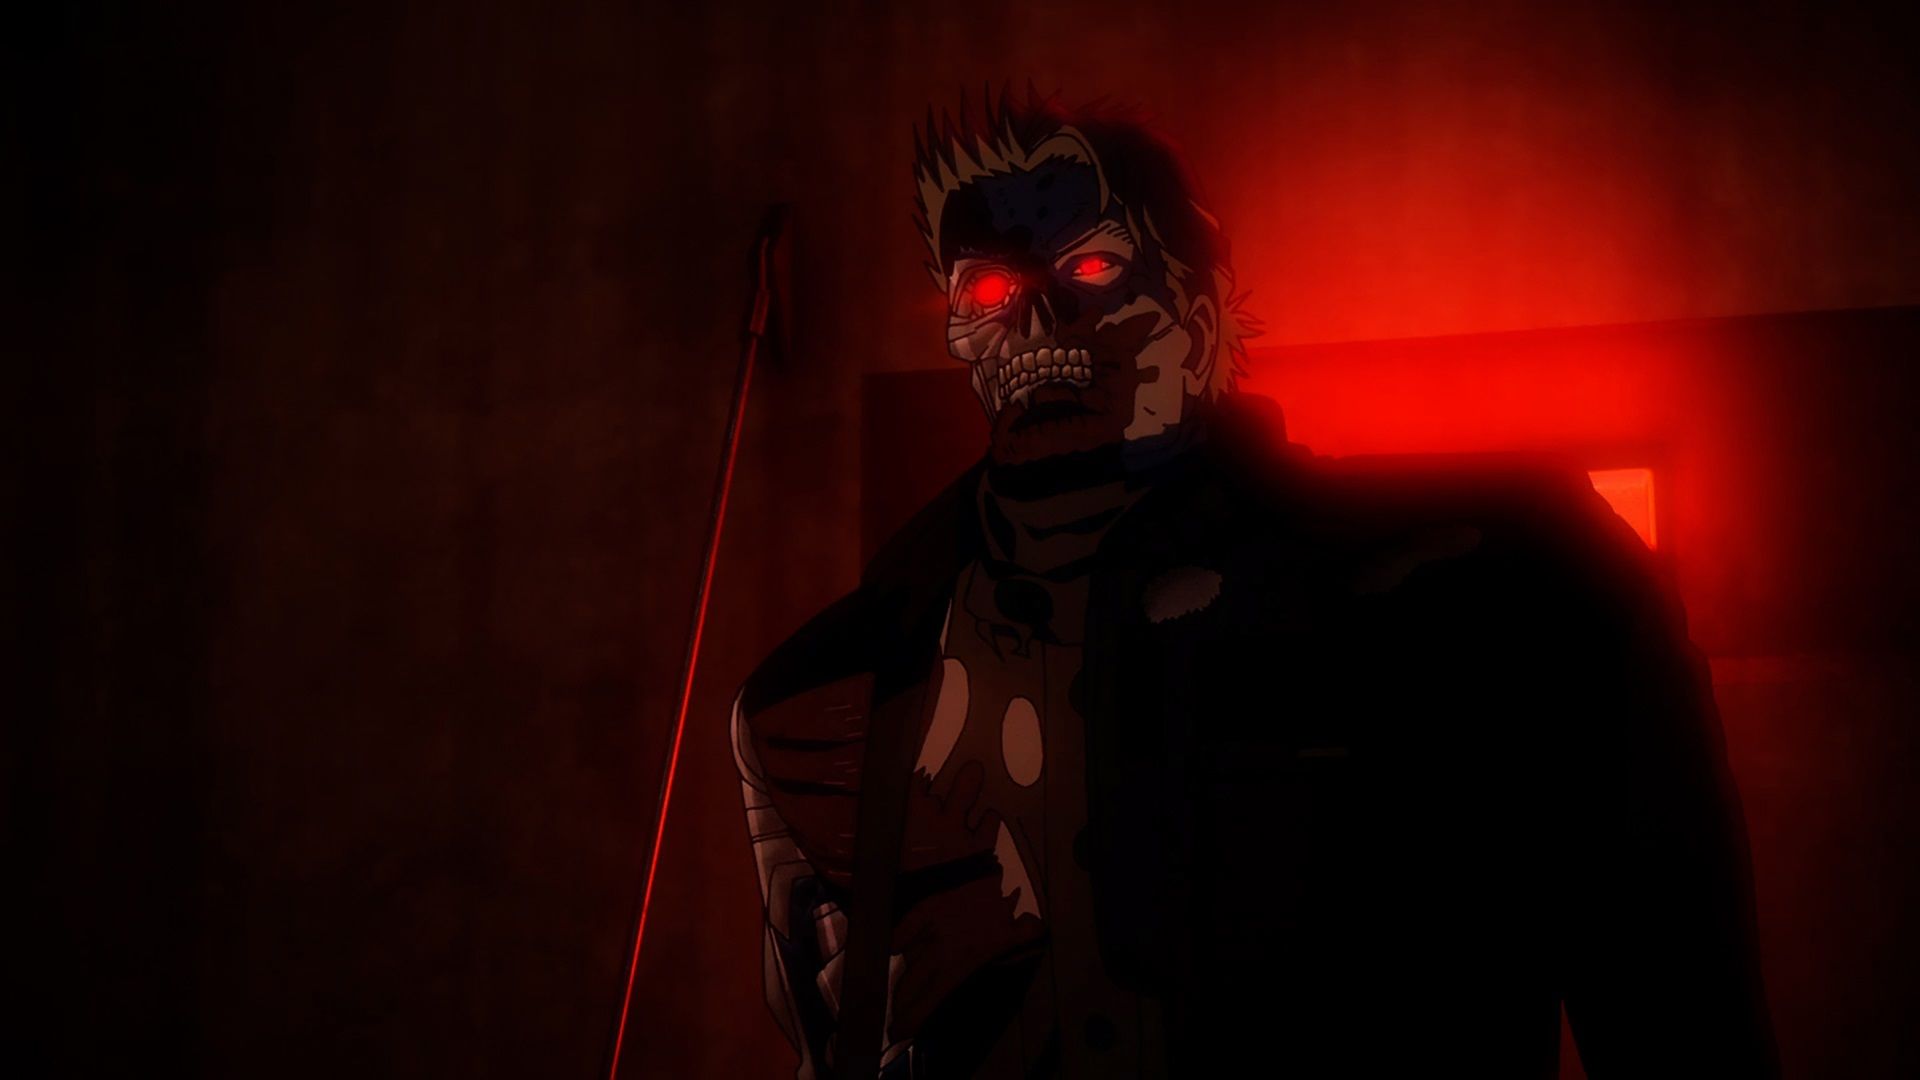 ‘Terminator Zero’ showrunner says anime series will convey the ‘serial killer’ atmosphere of the original film